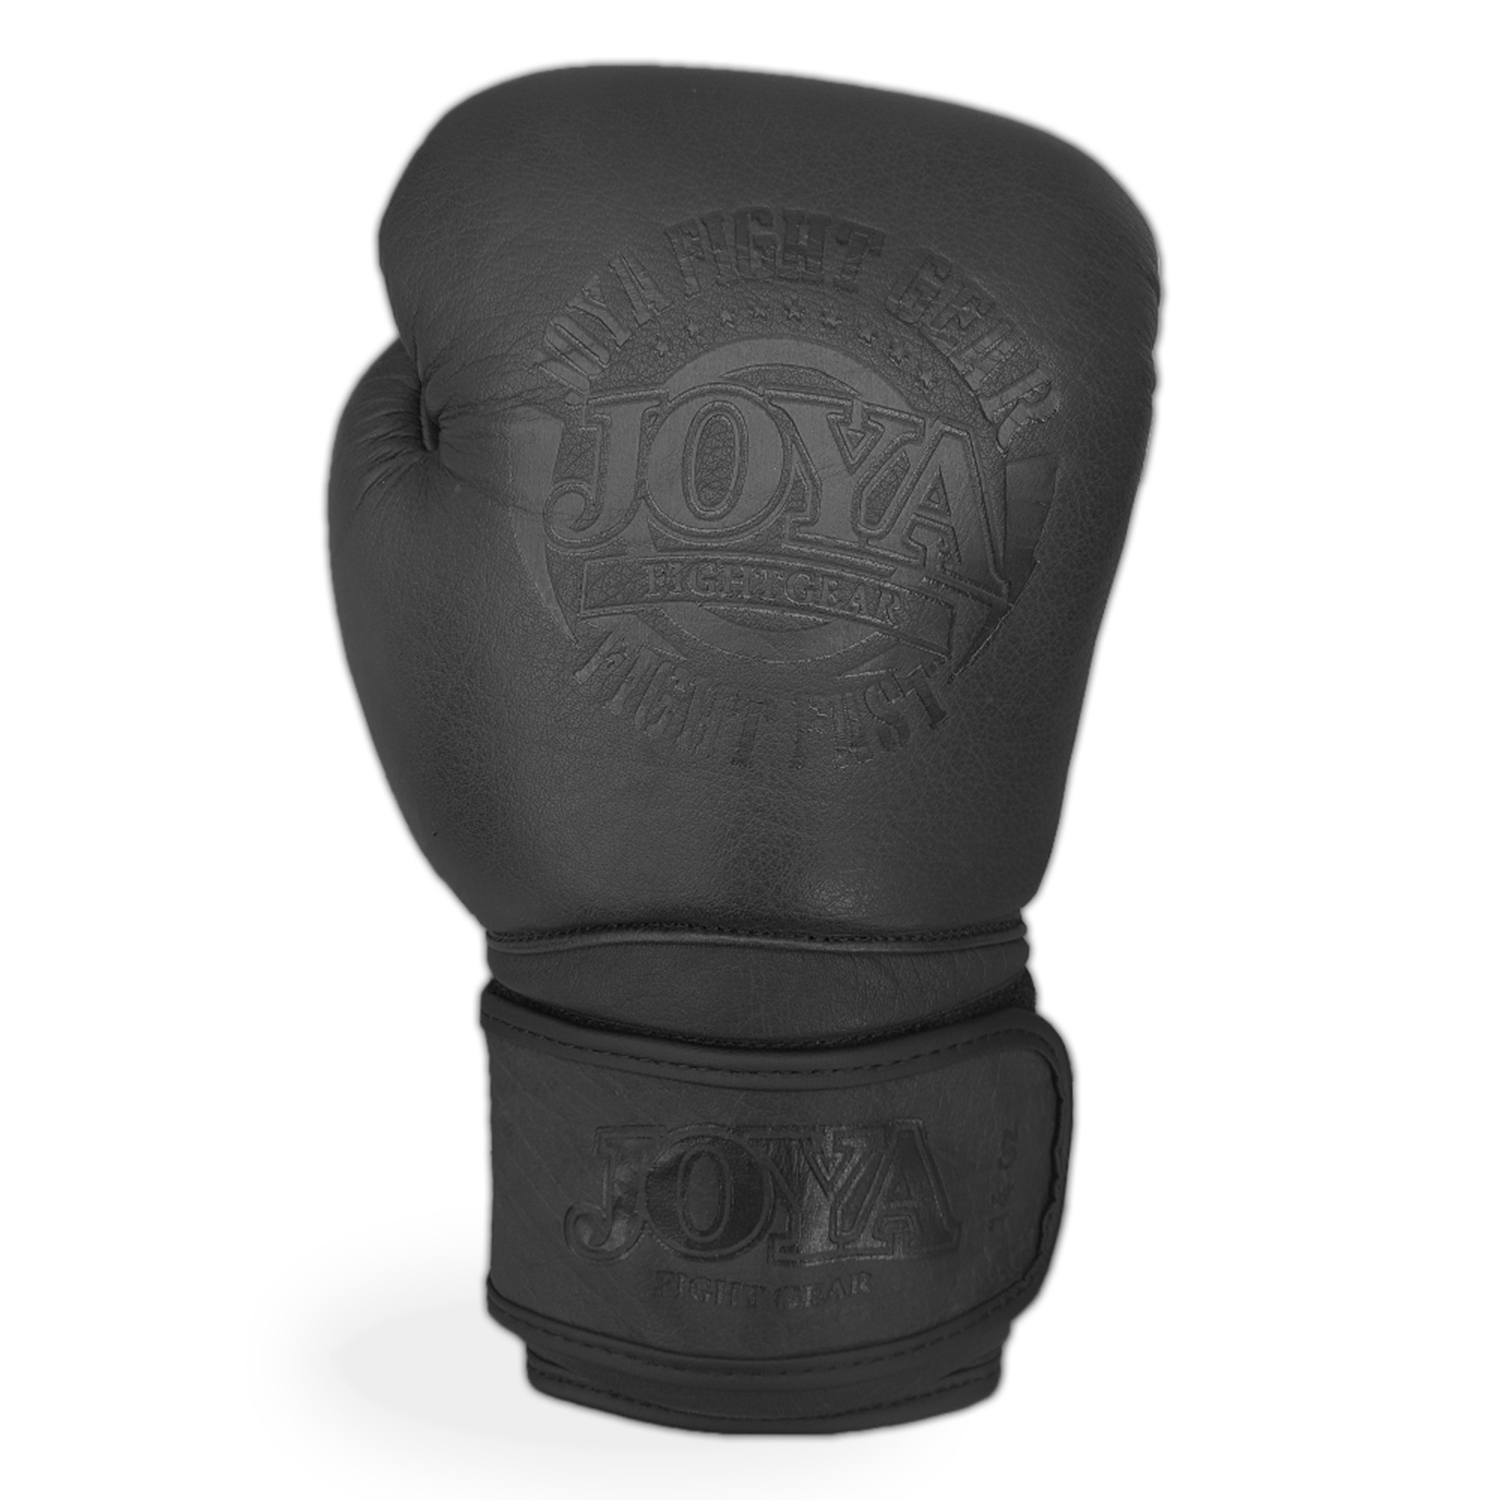 Joya Fight Fast boxing gloves black 14 oz